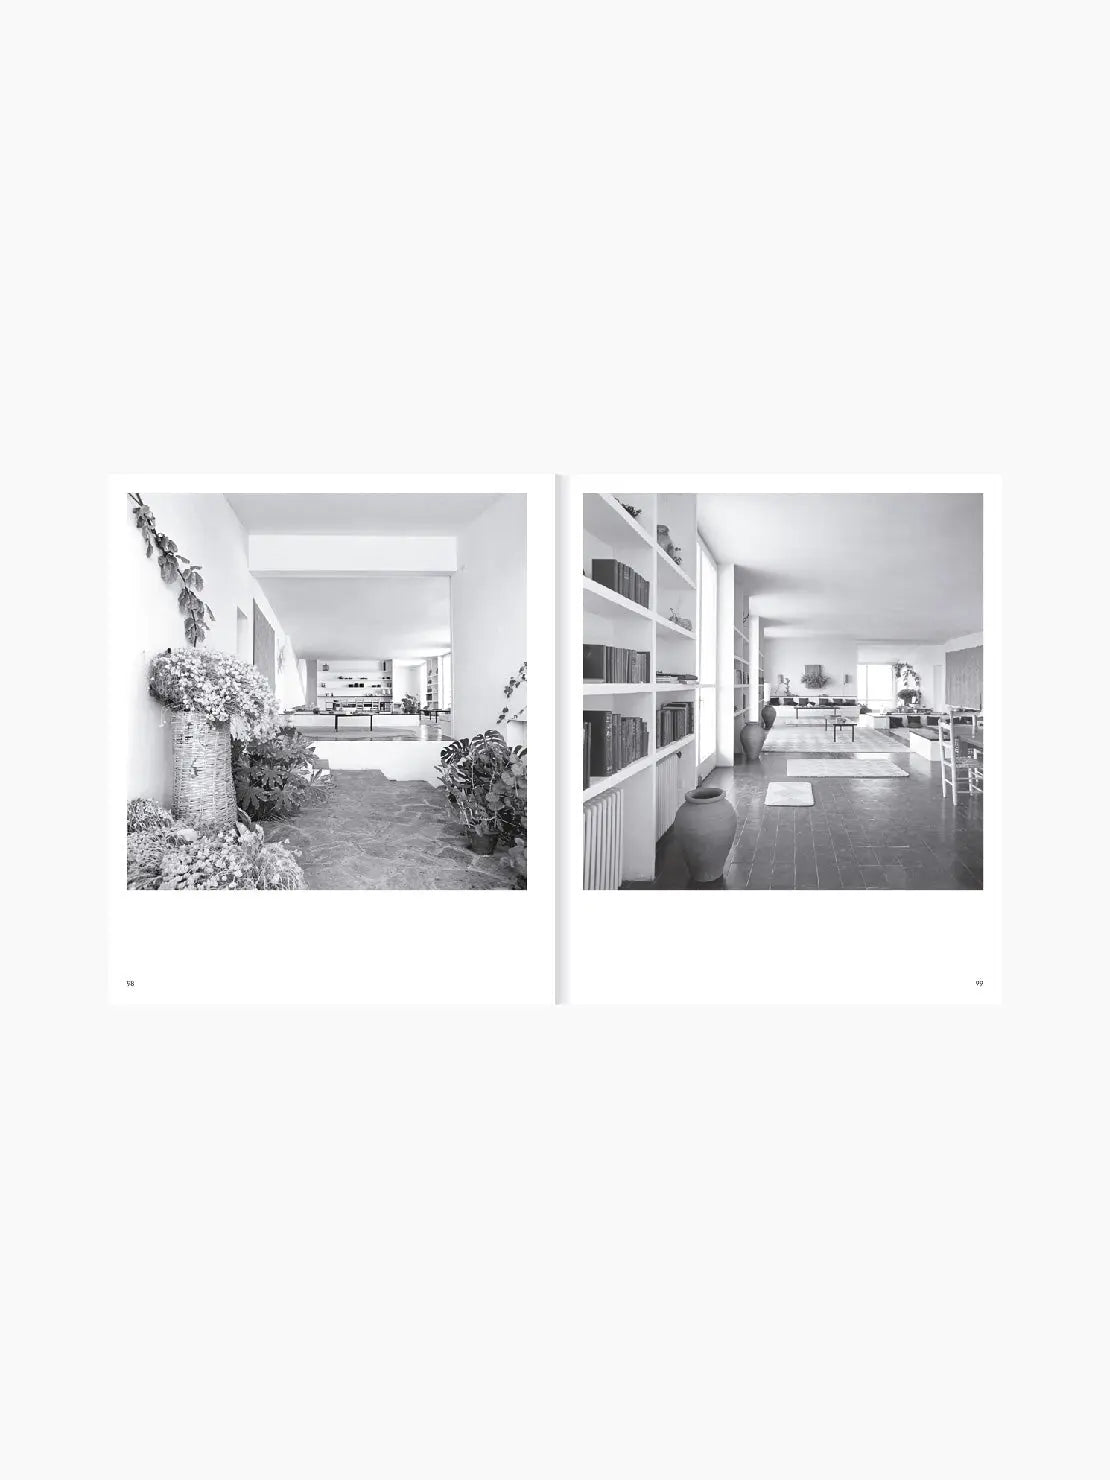 The Modern Architecture of Cadaqués: 195571 Apartamento